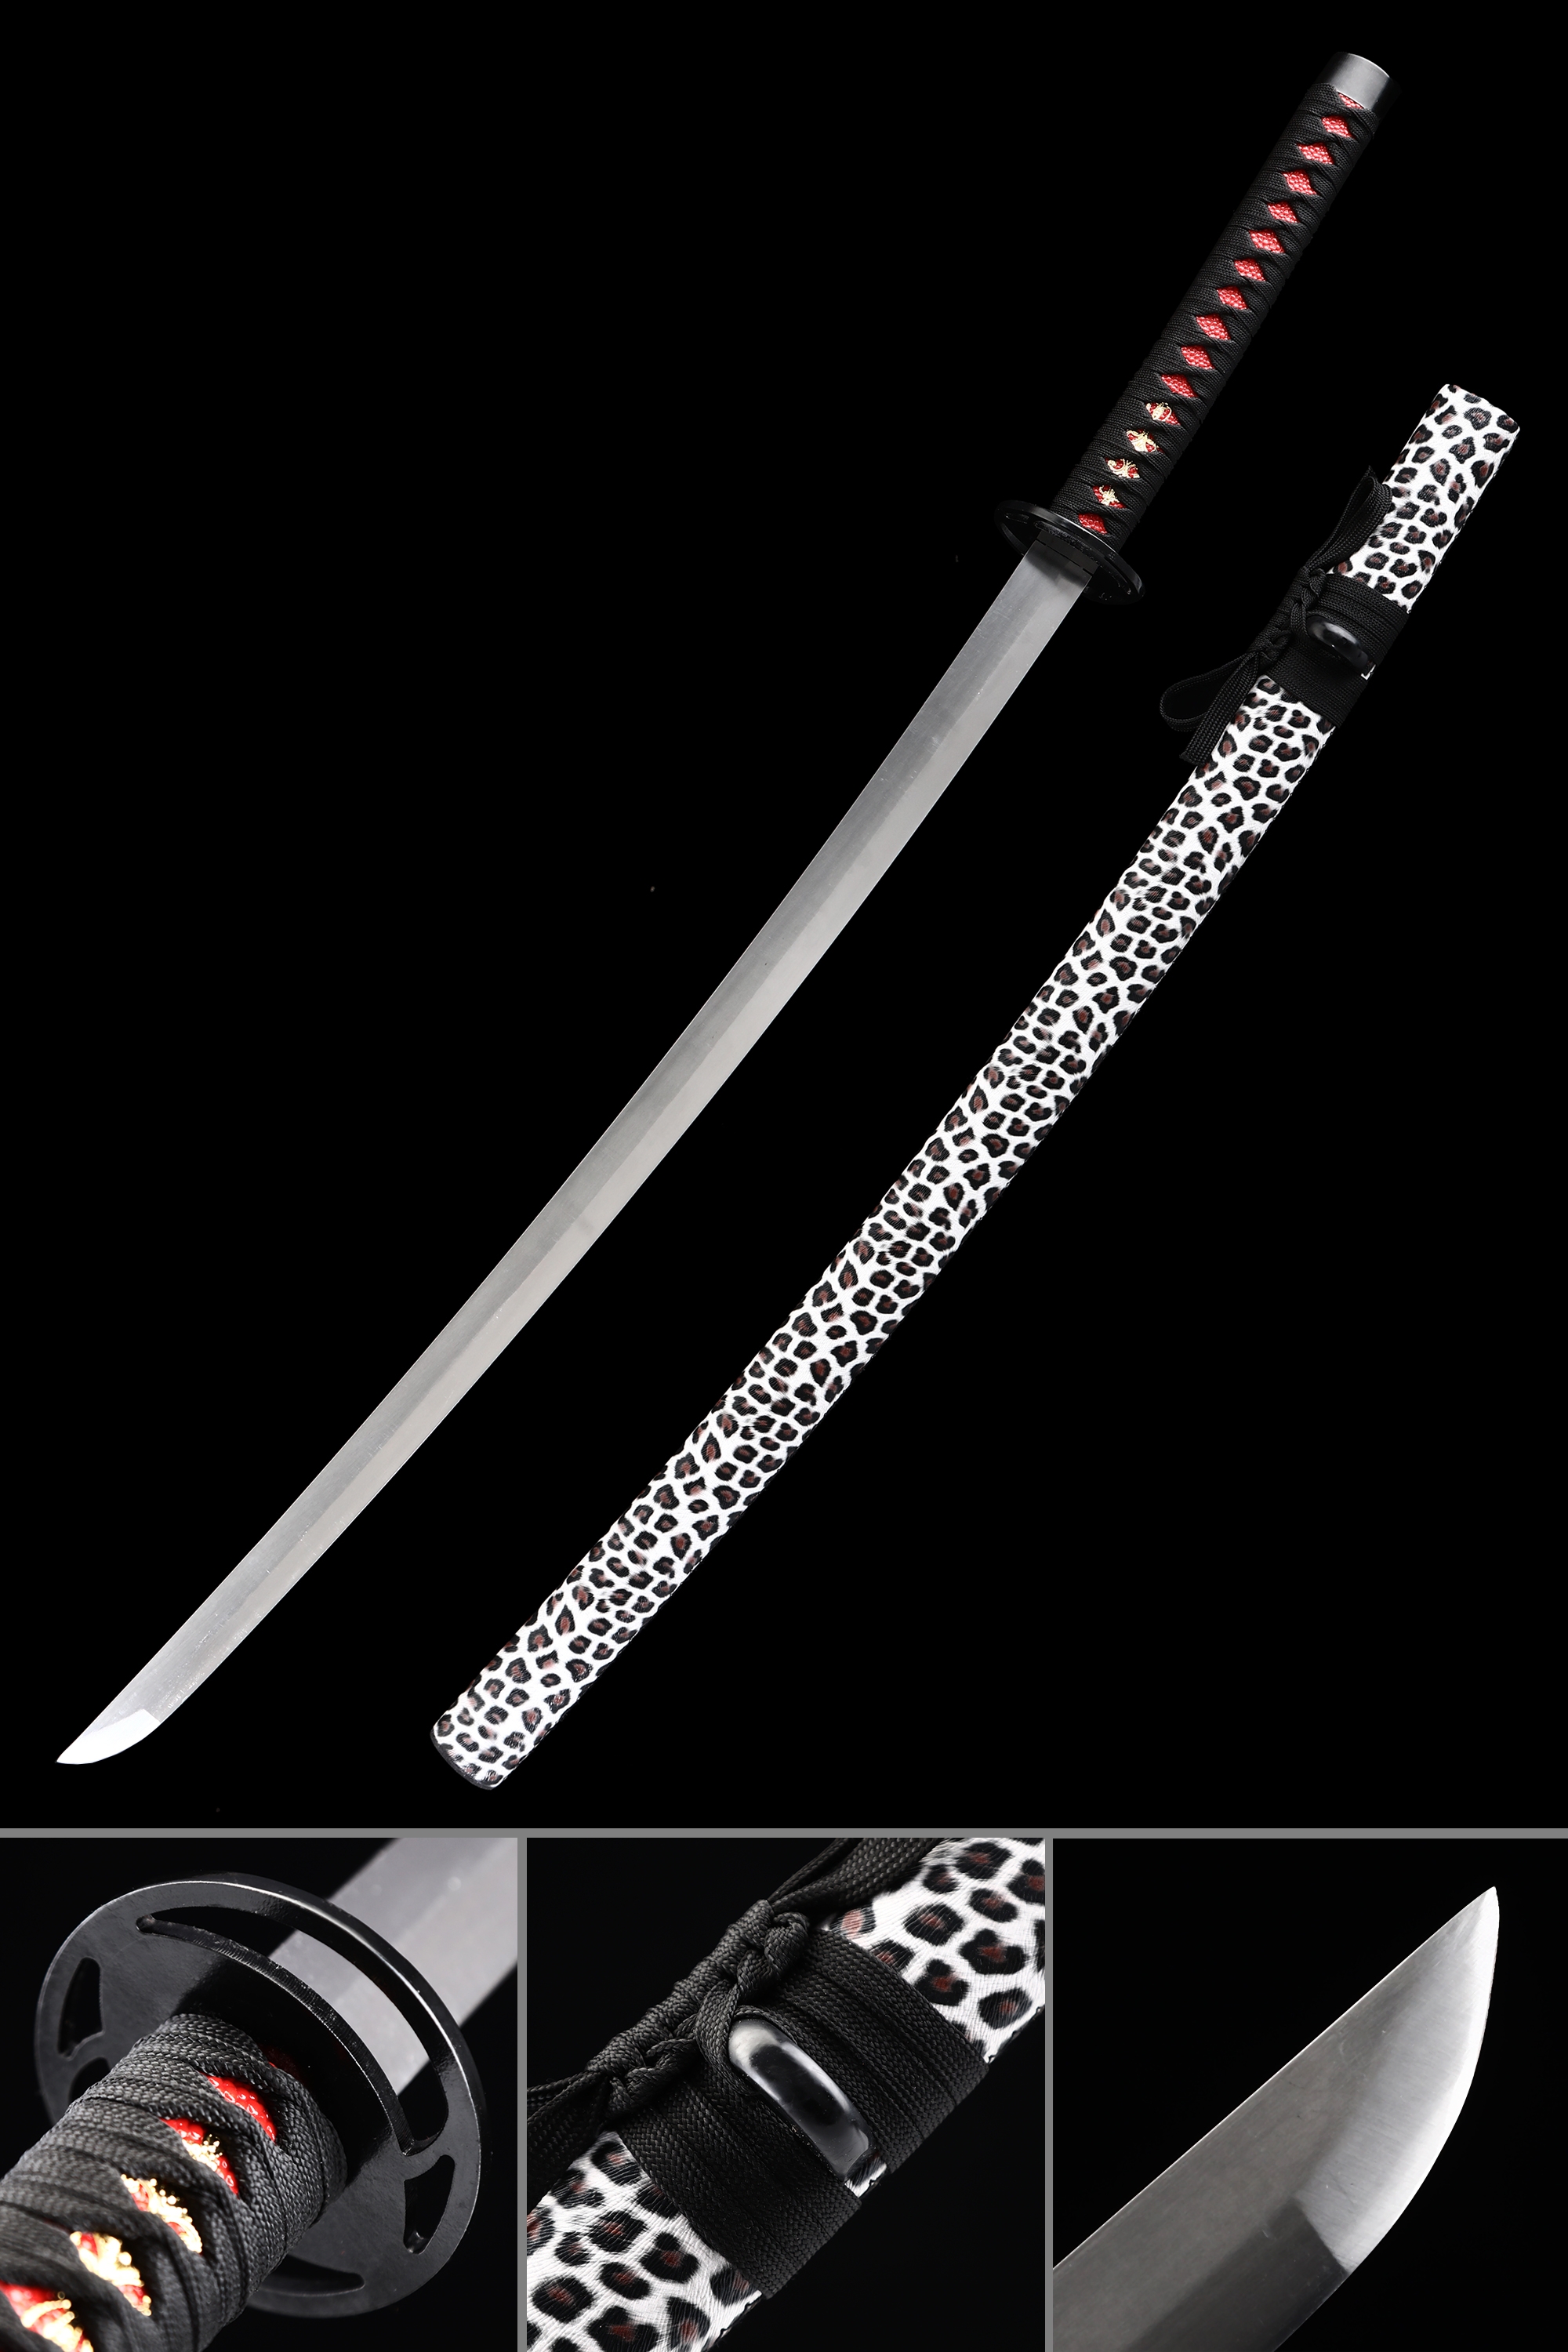 1060 Carbon Steel Katana Handmade Japanese Samurai Sword 1060 Carbon Steel With Multi Colored